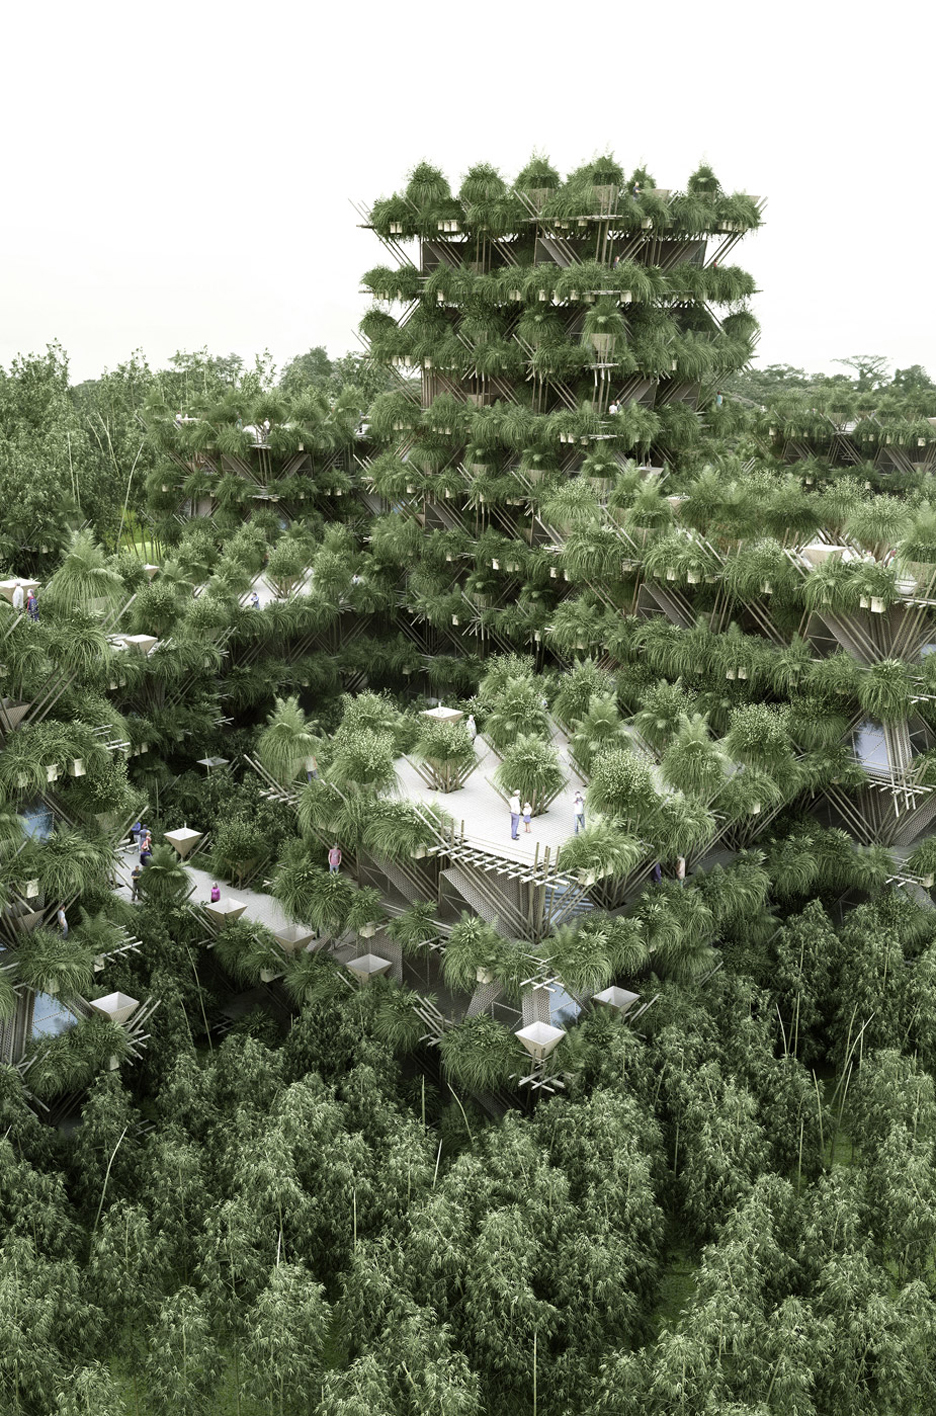 Penda Future Vision for Rising Canes, Beijing Design Week 2015